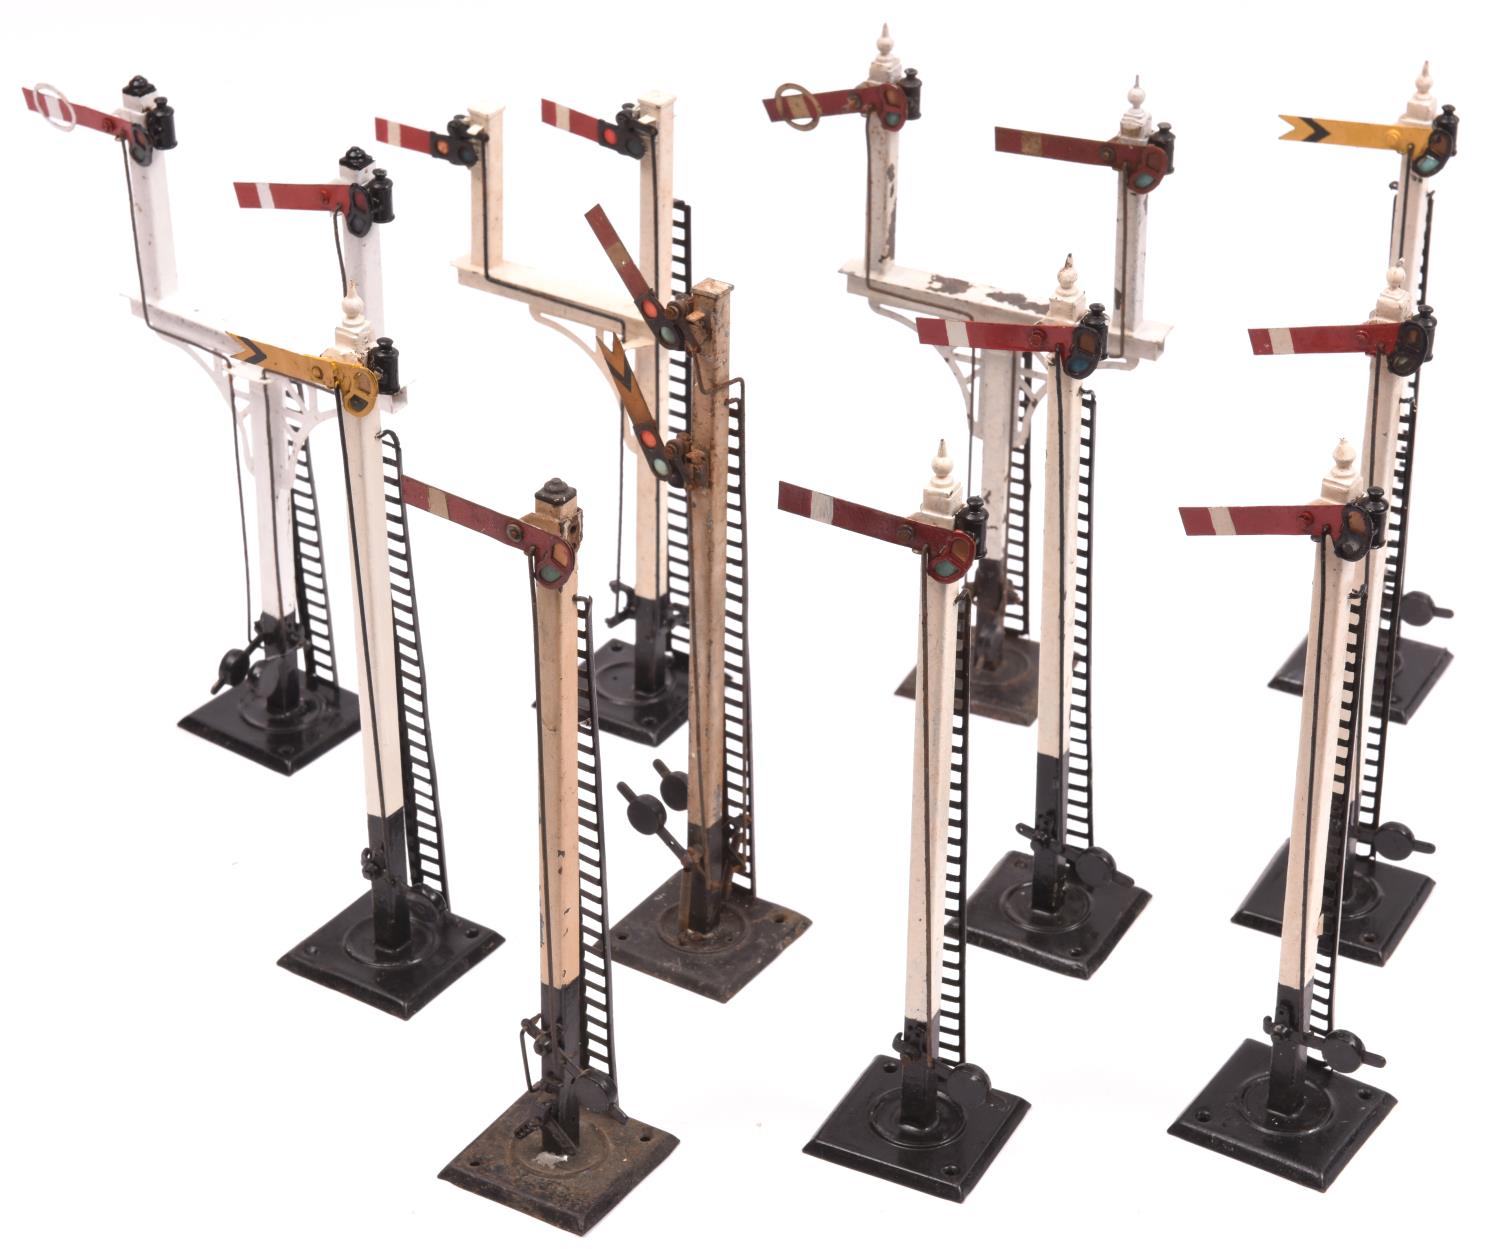 11x O Gauge model railway semaphore signals by Bassett Lowke. Including 5x single arm Home